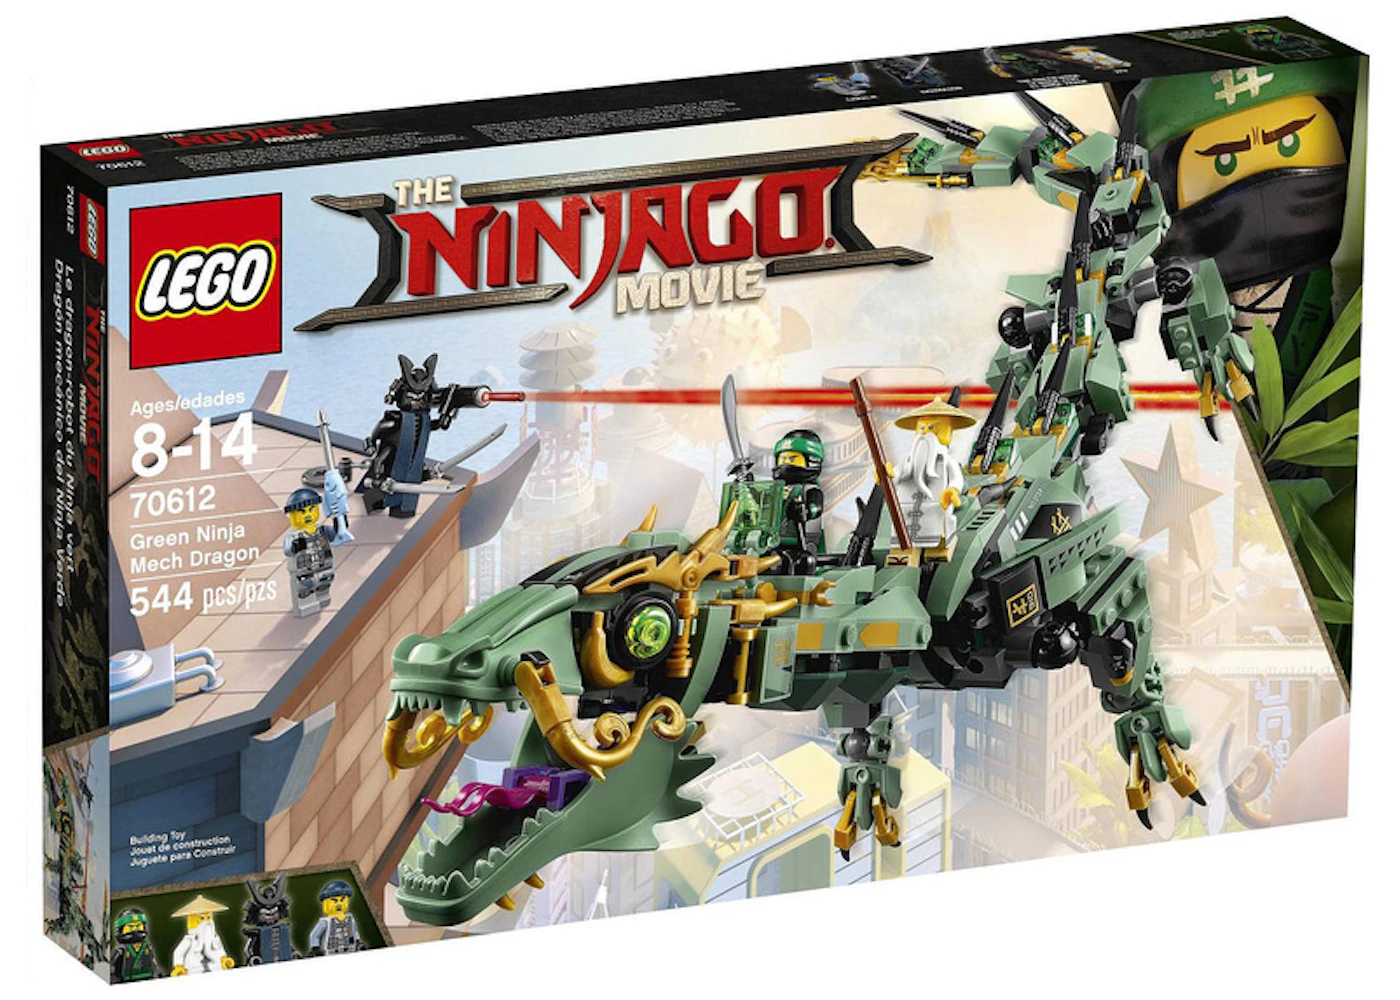 Topmøde Svaghed talent LEGO The LEGO Ninjago Movie Green Ninja Mech Dragon Set 70612 - US